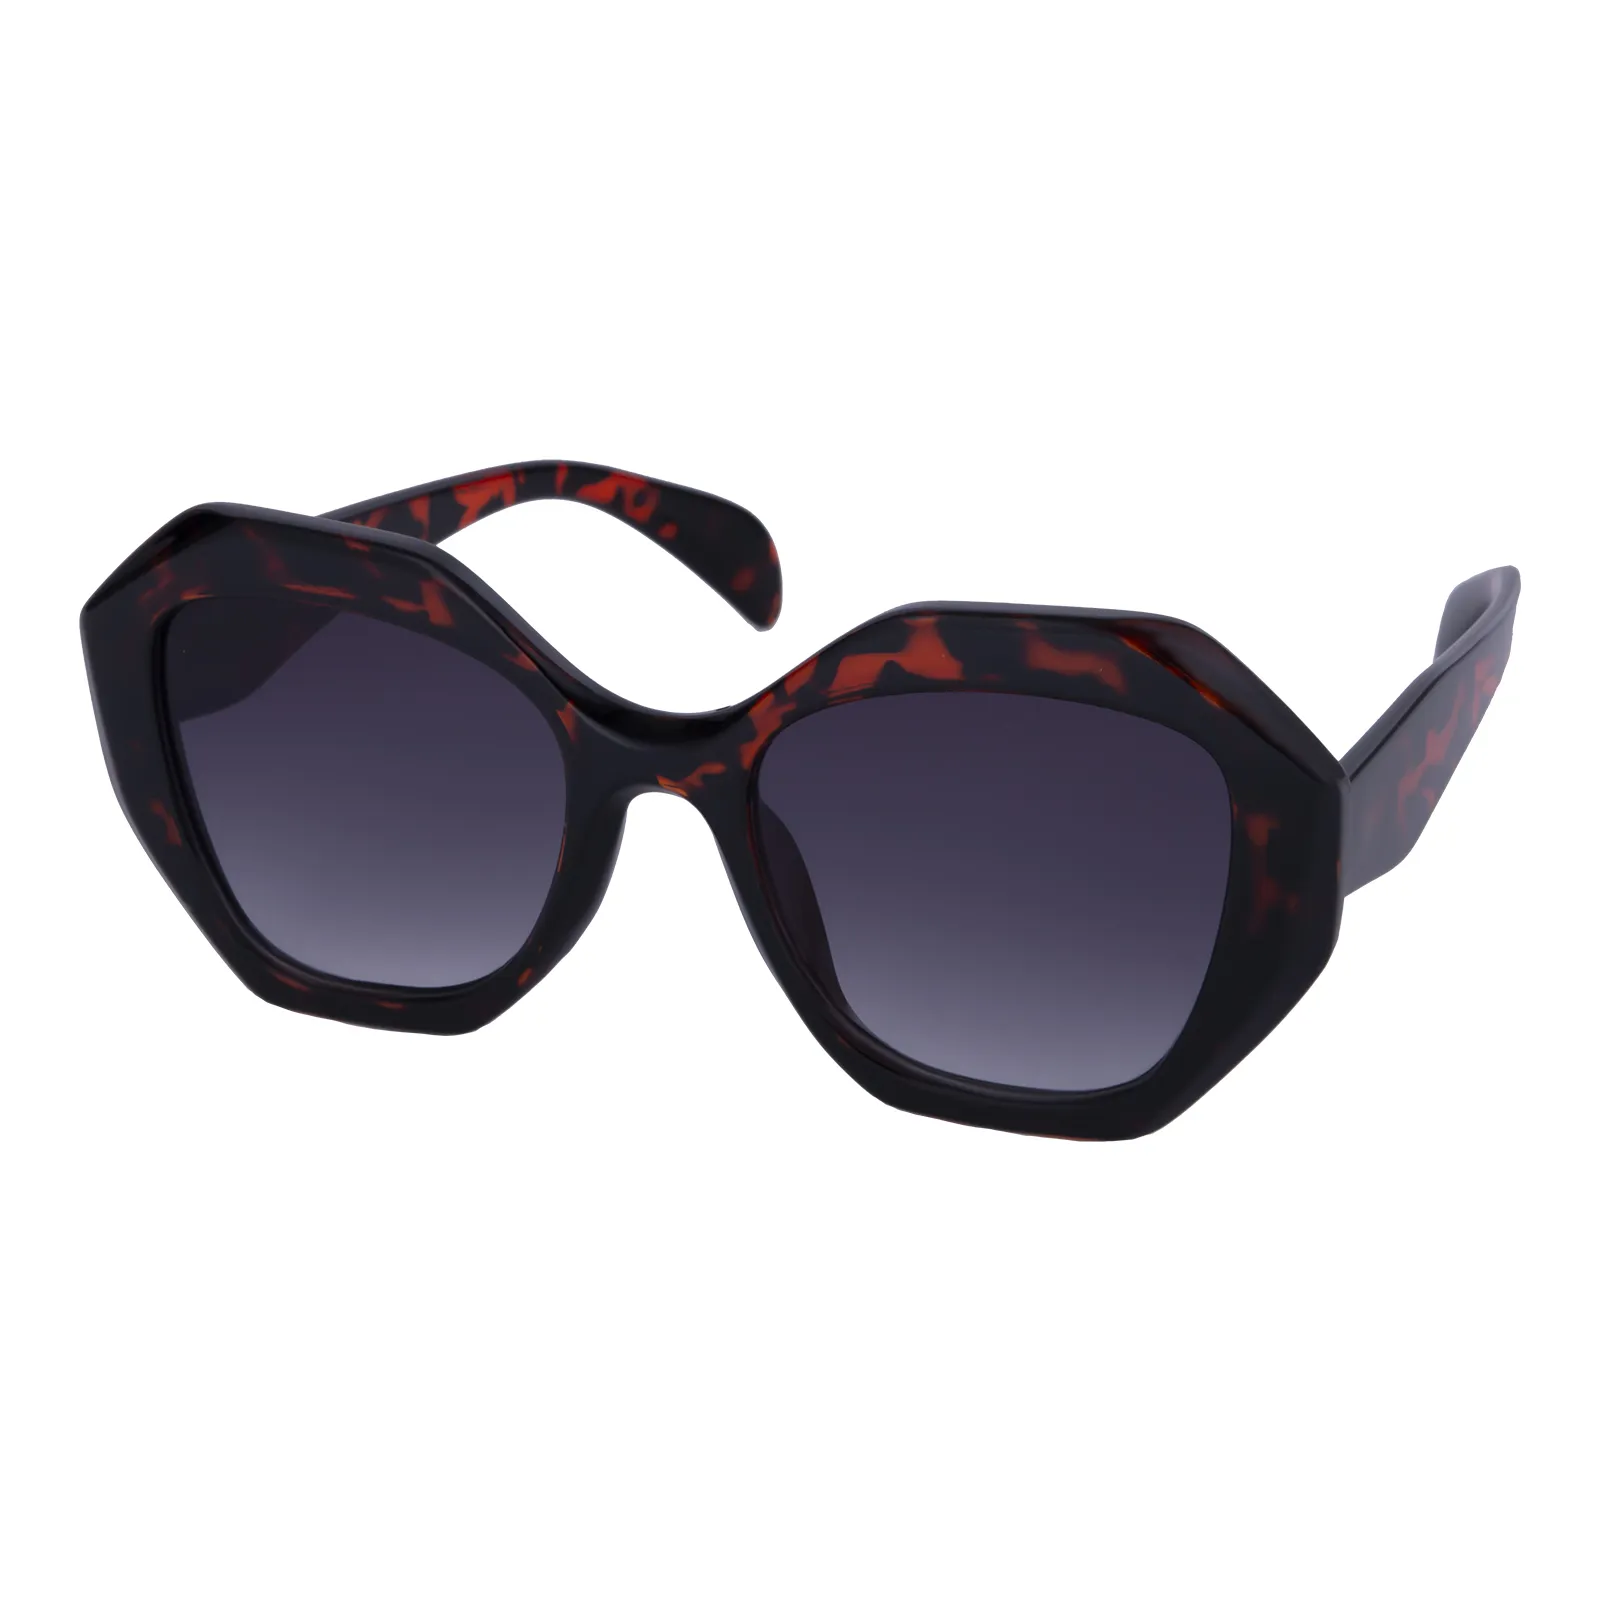 Bridget - Geometric Tortoisehell Sunglasses for Women